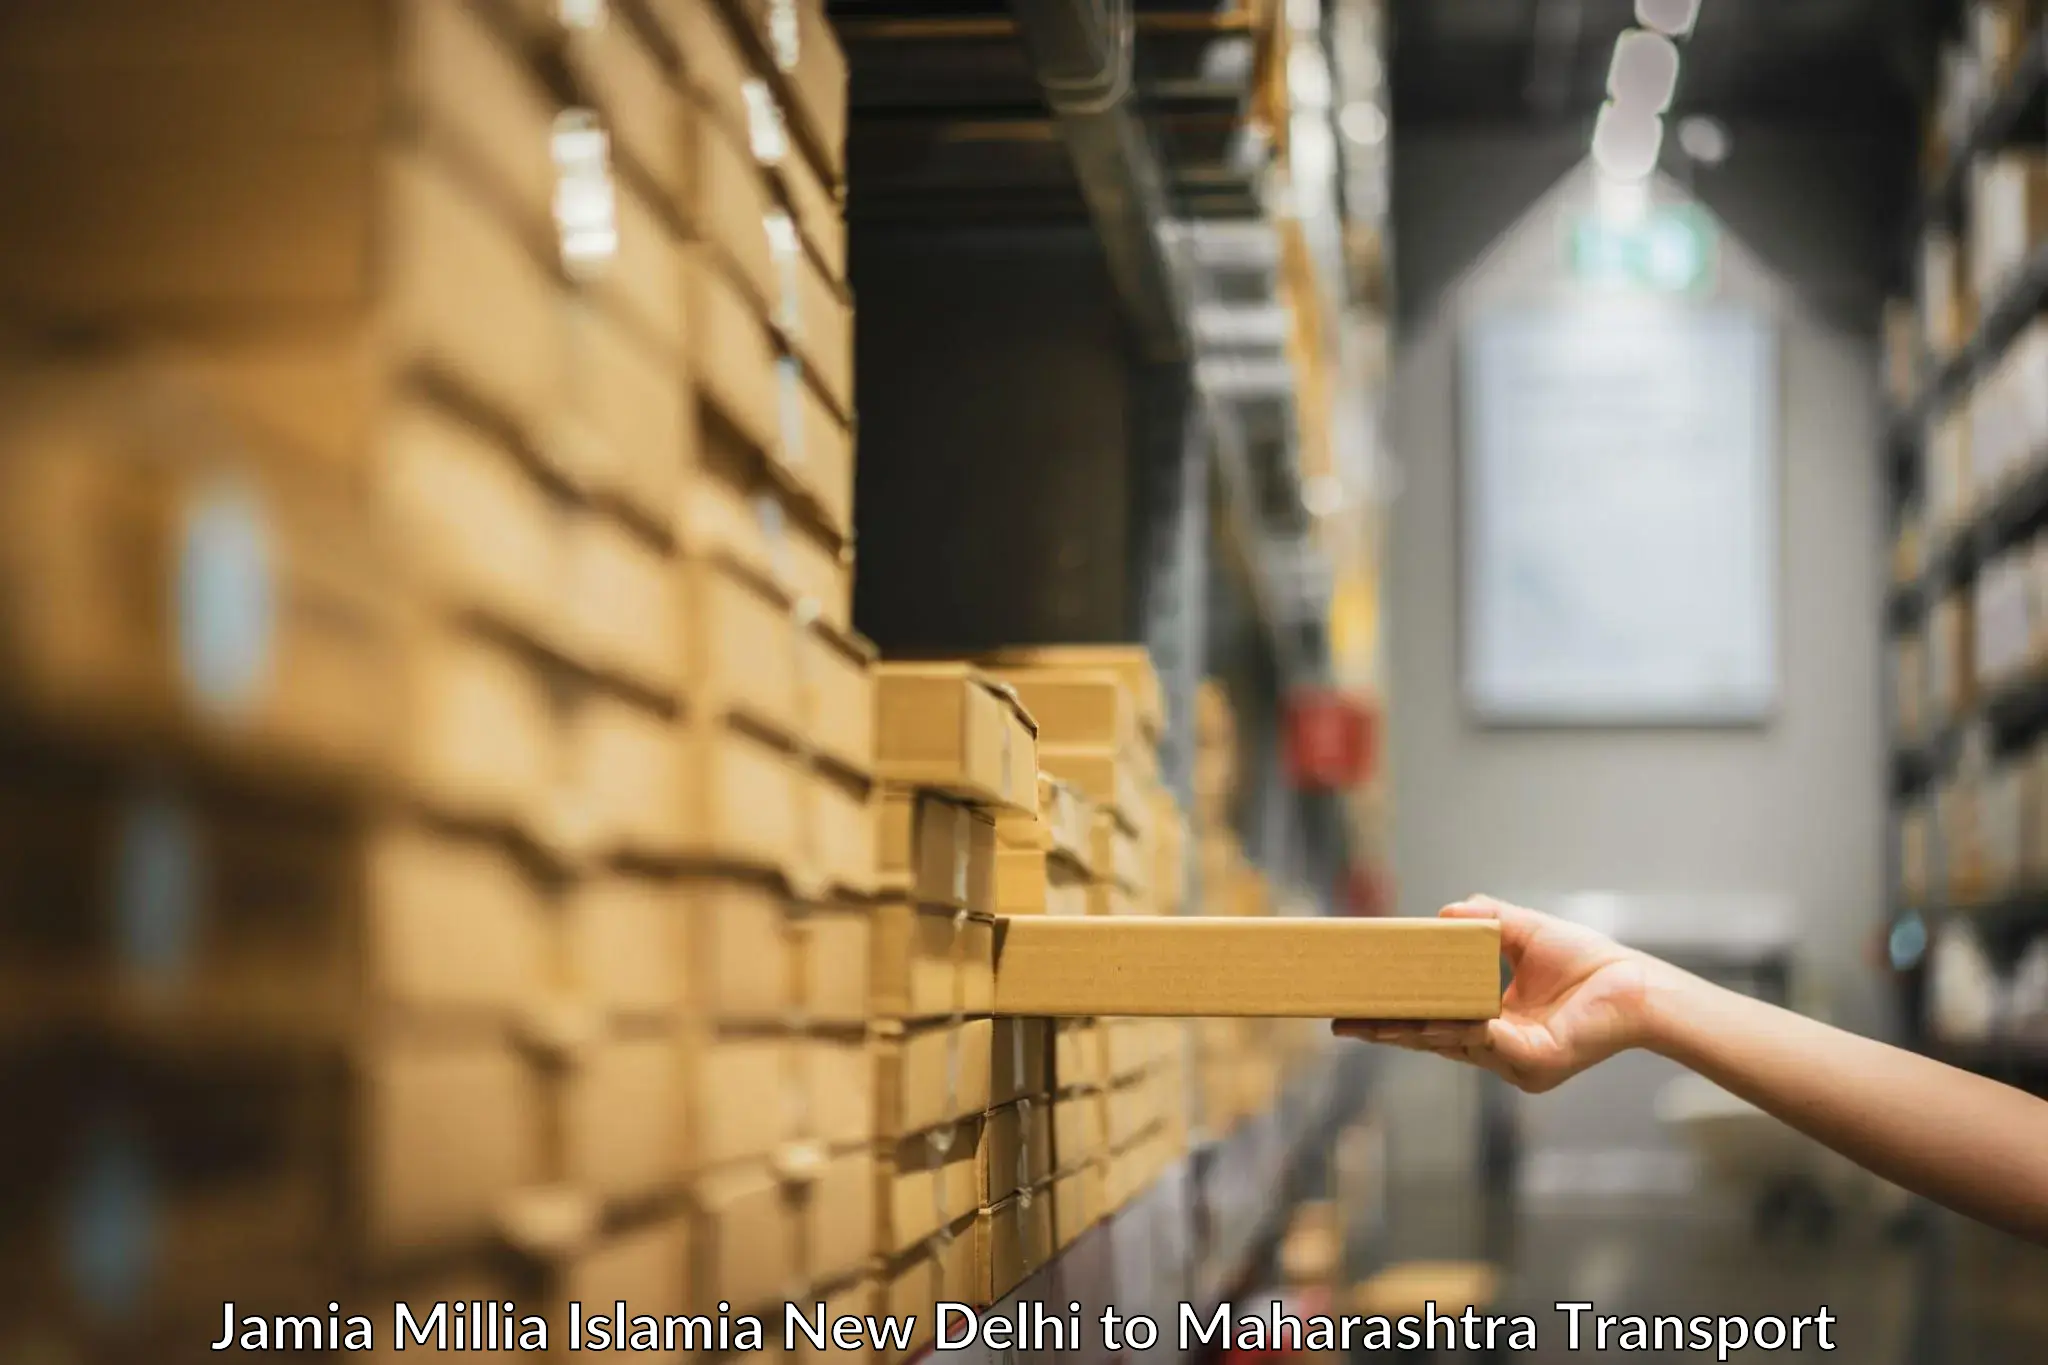 Furniture transport service Jamia Millia Islamia New Delhi to Aurangabad